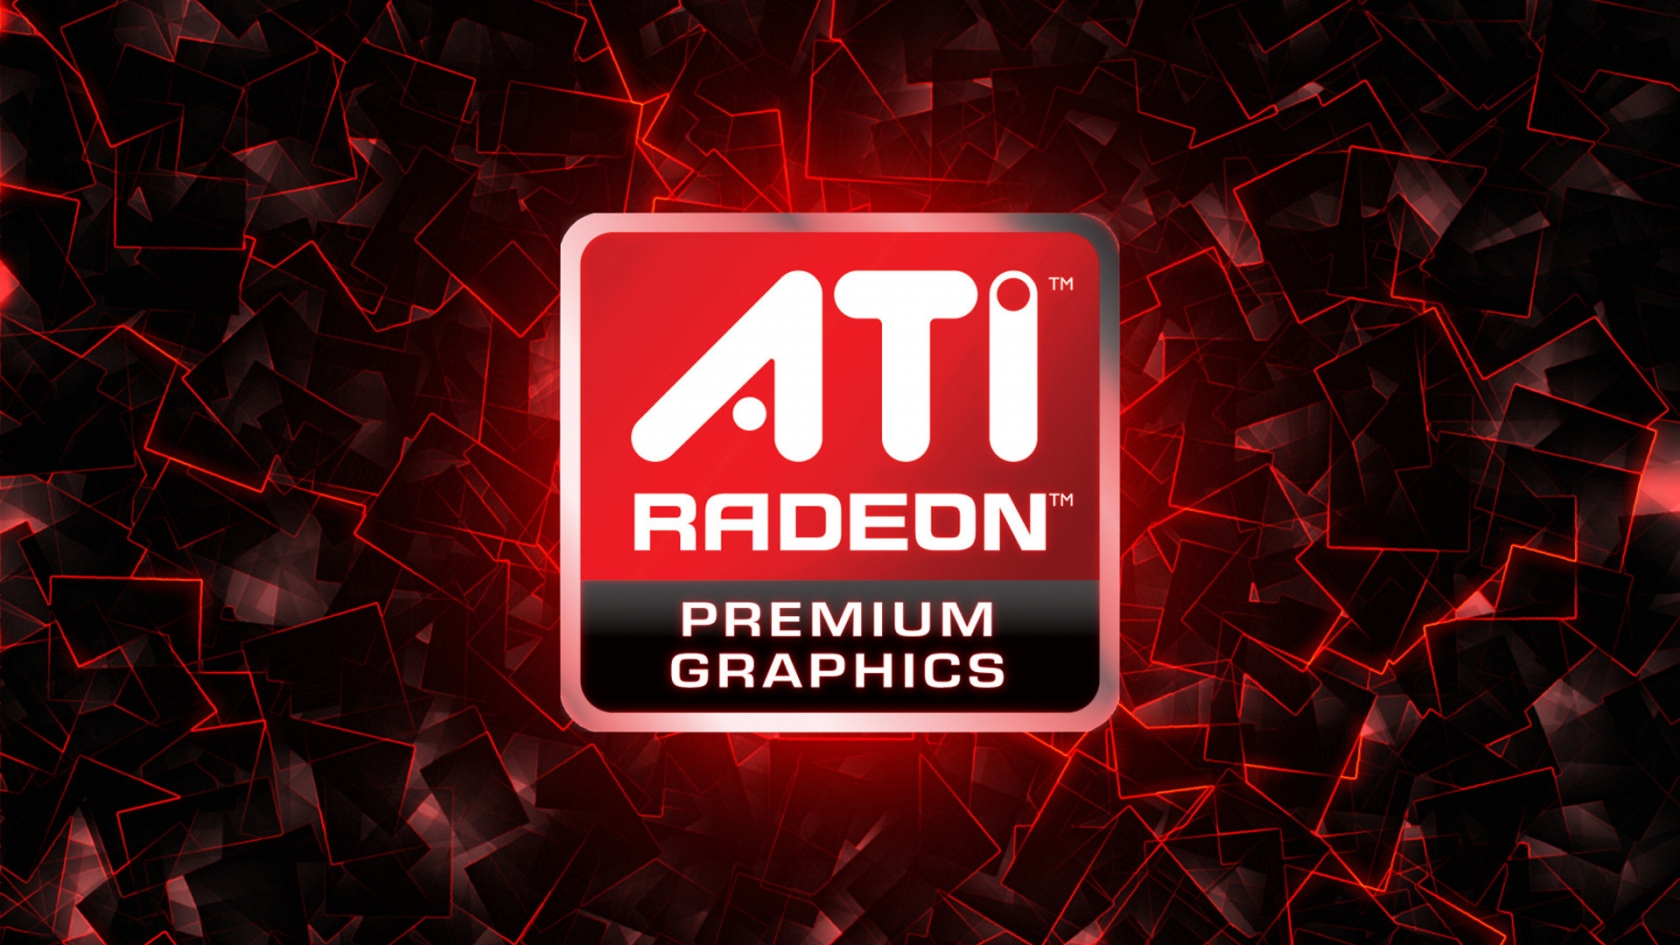 ATI Radeon Premium Graphics for 1680 x 945 HDTV resolution